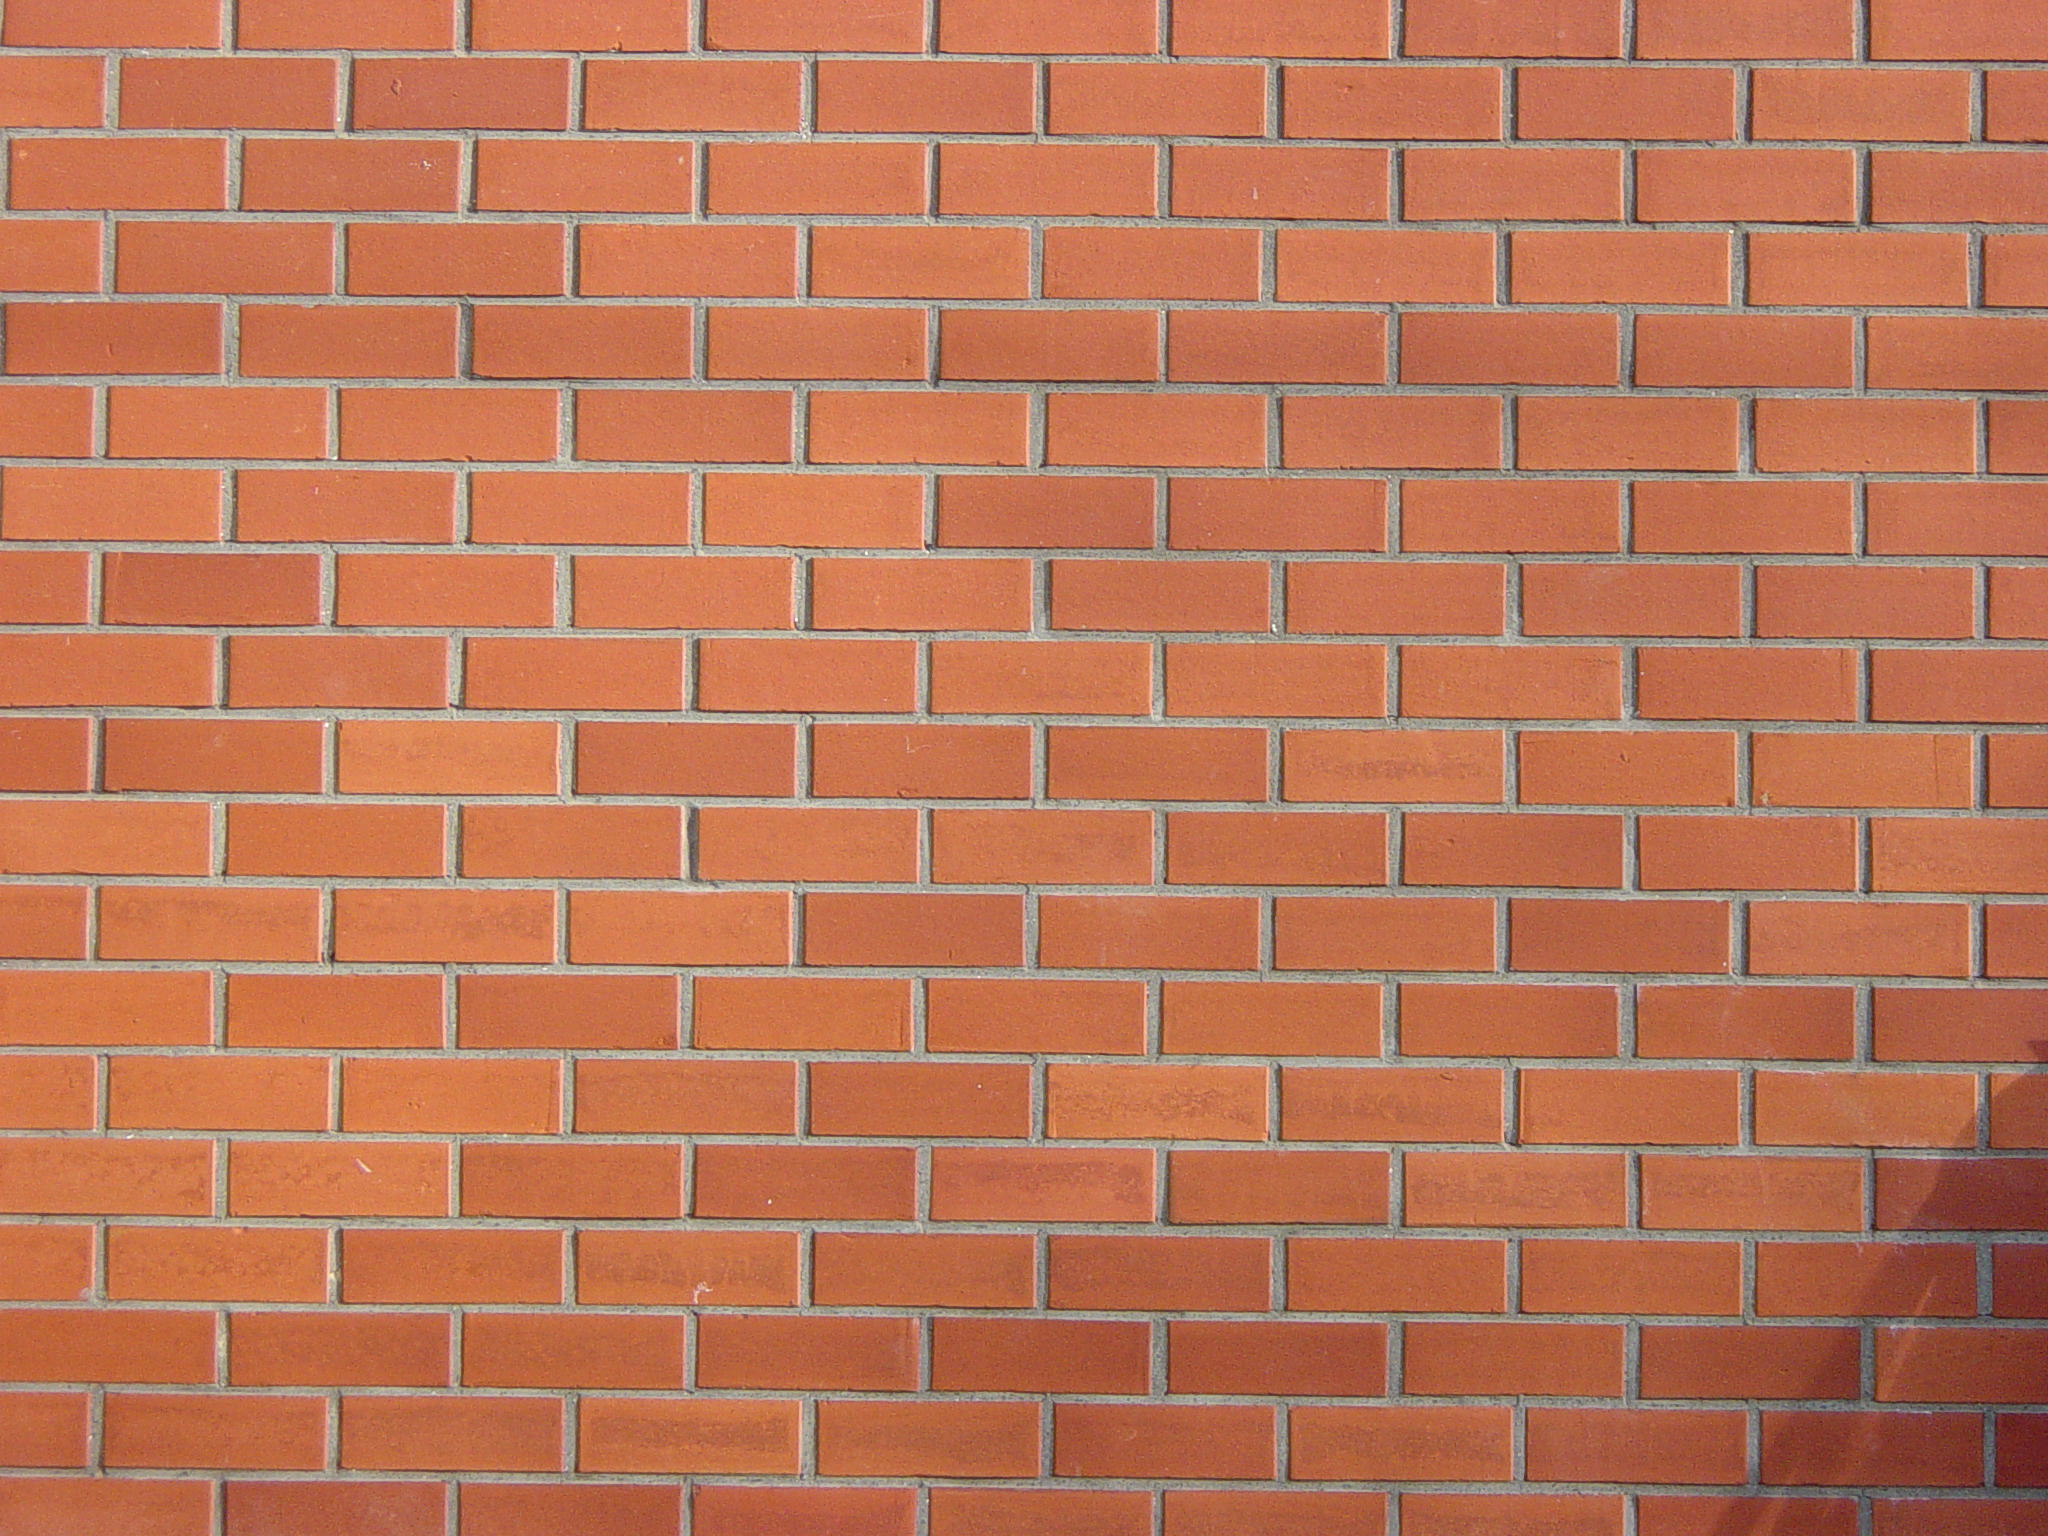 Brick_wall_by_ashzstock.jpg